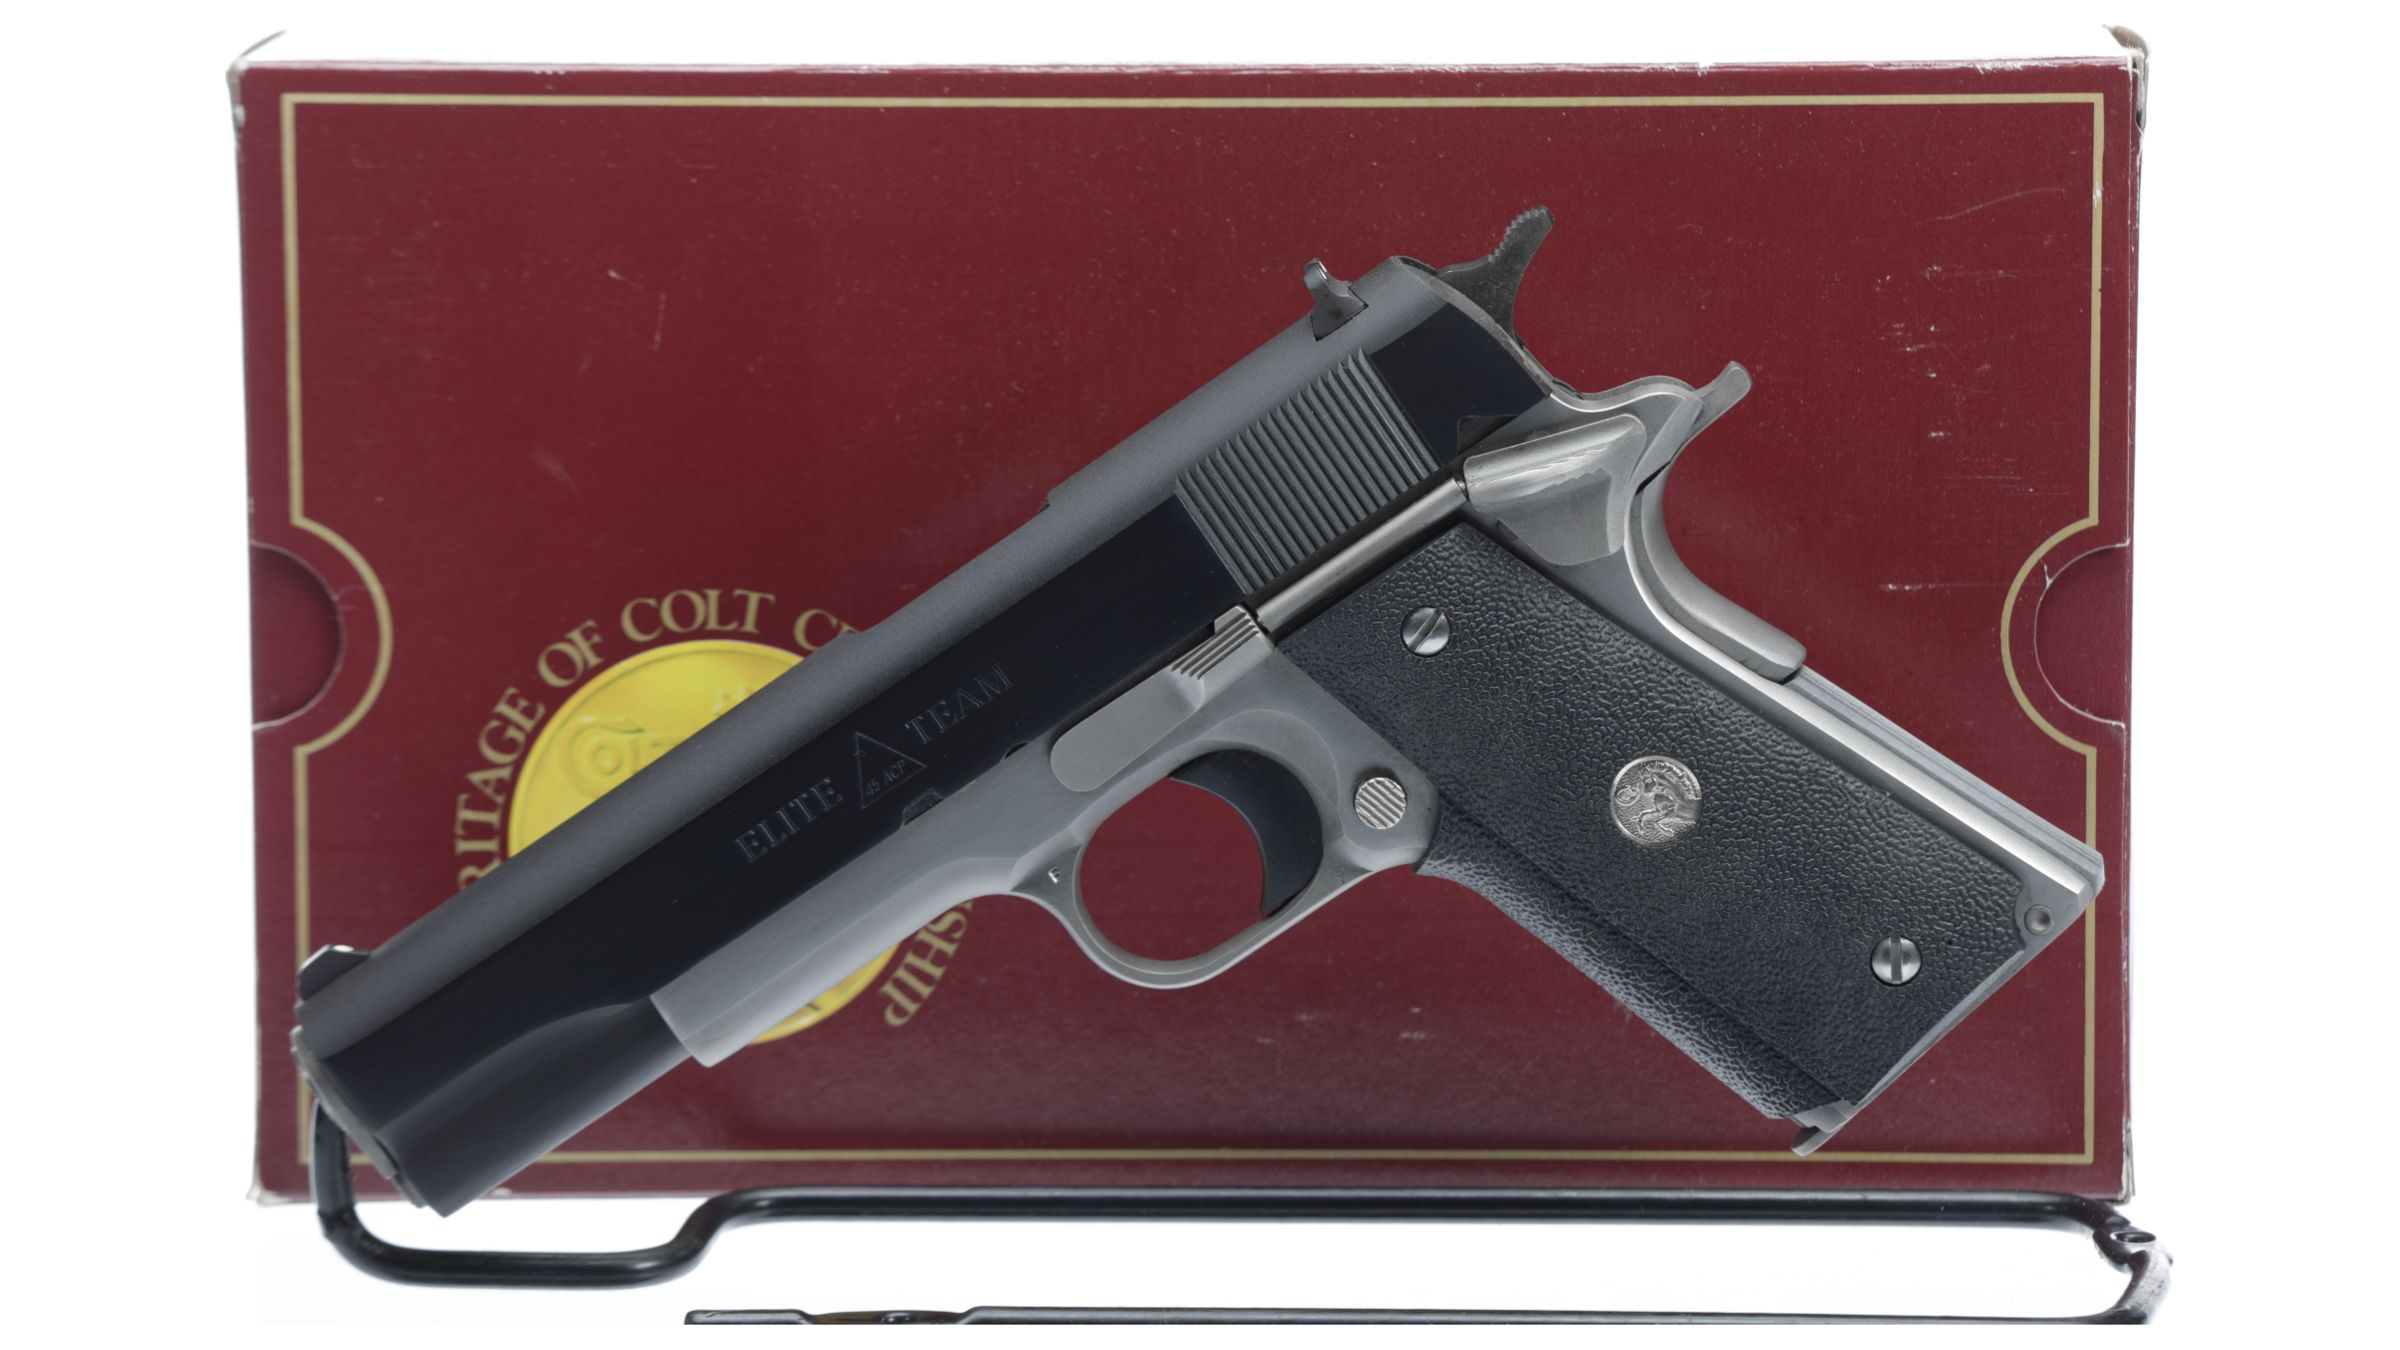 Colt Combat Elite Custom Edition Semi-Automatic Pistol with Case